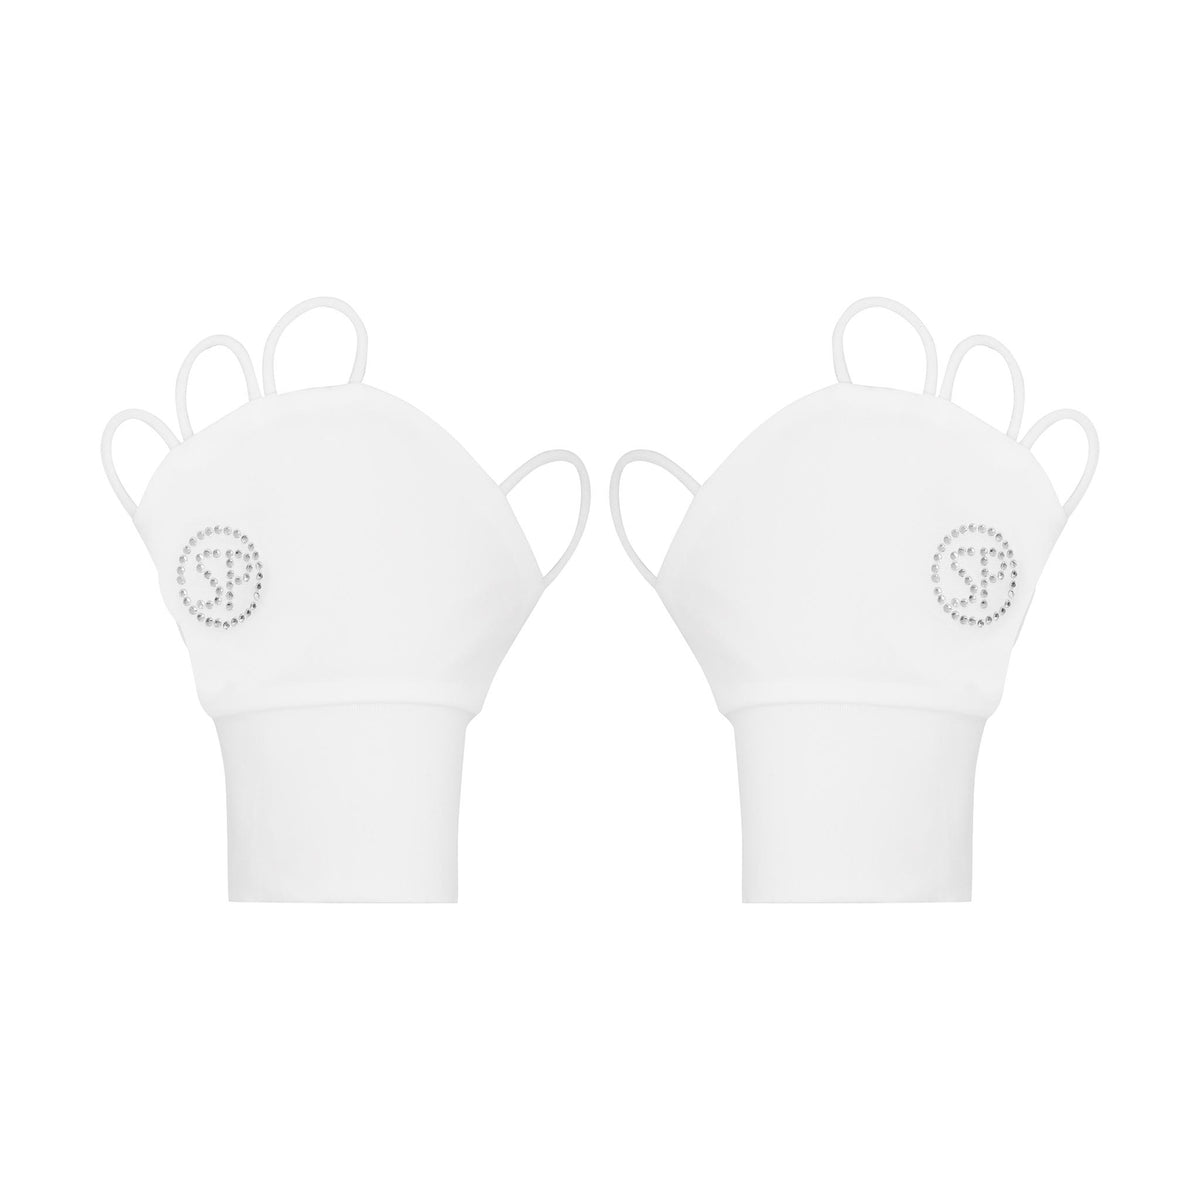 SP Glove (Palmless sun glove) - Crystal logo [White] - SParms